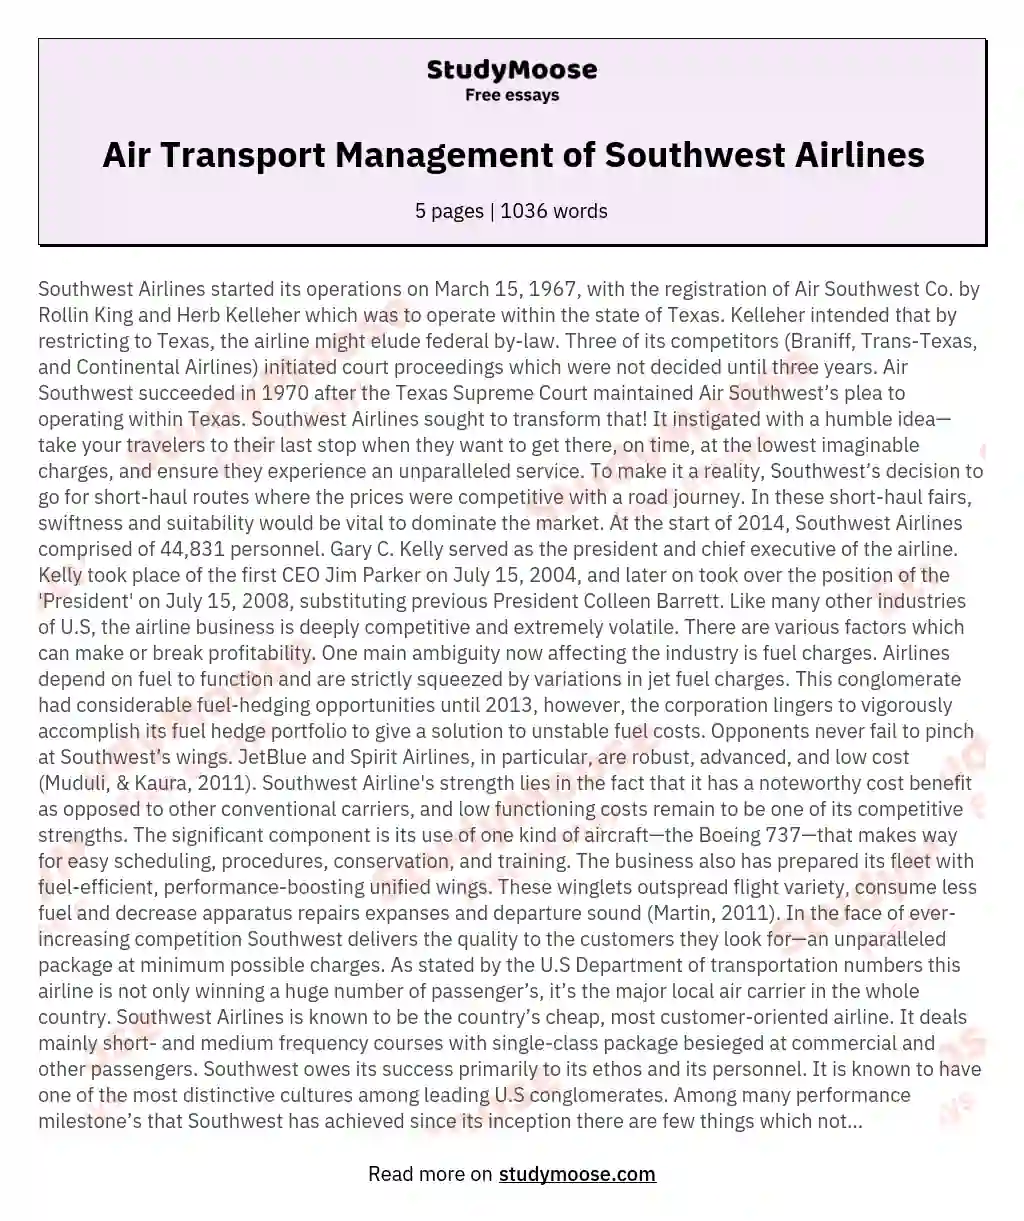 Air Transport Management of Southwest Airlines essay